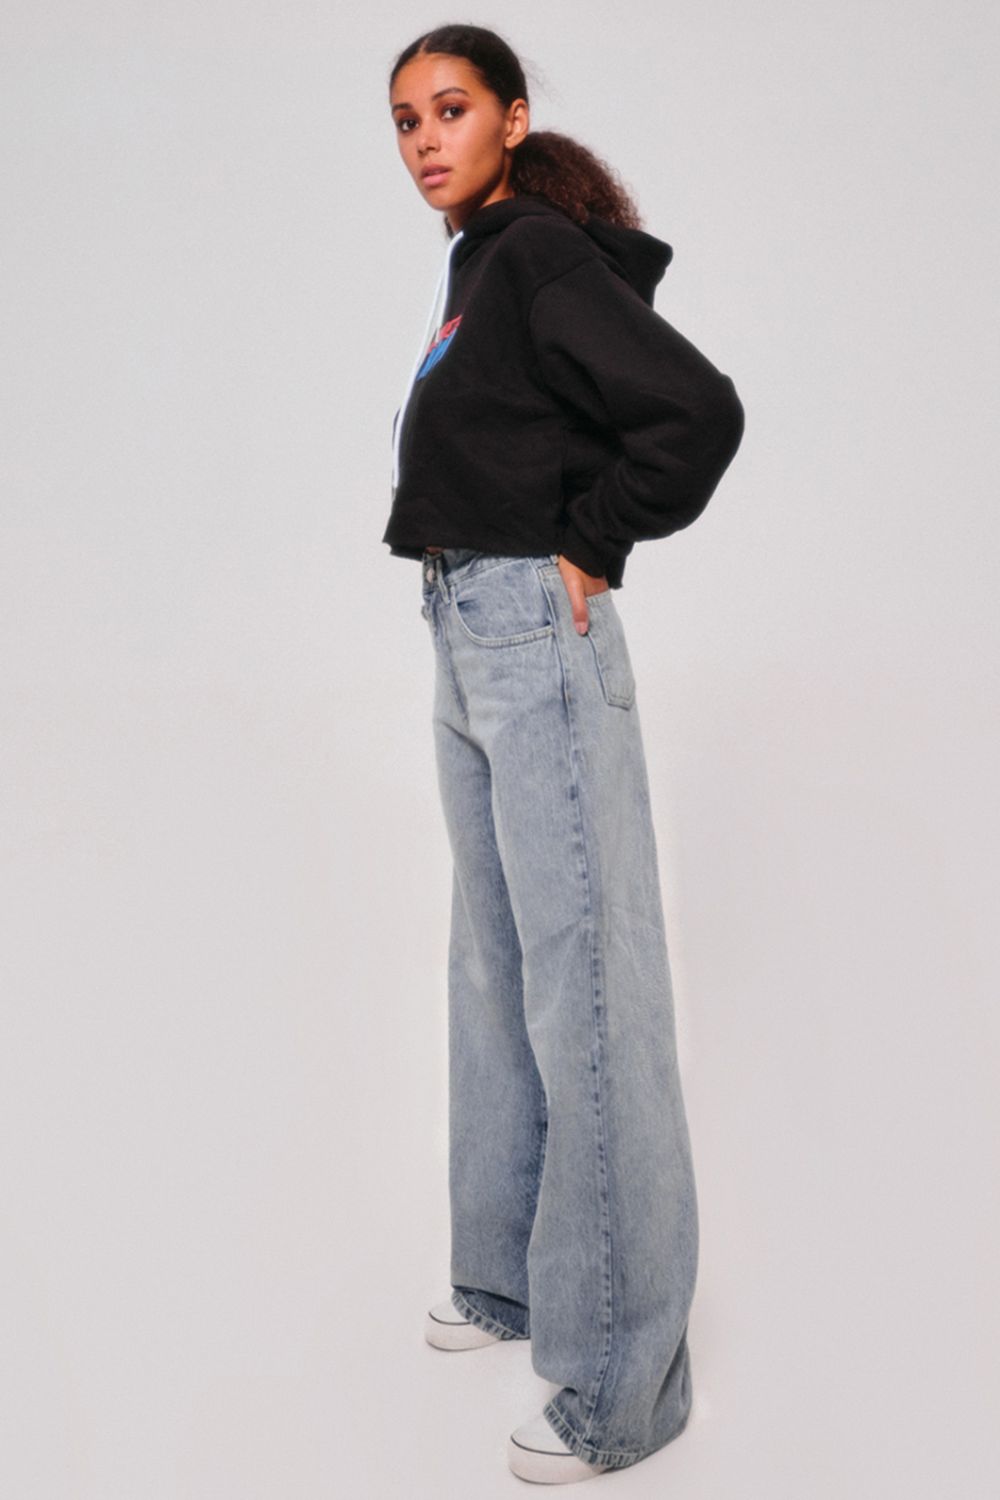 Wide Leg Jeans Selena Super High Rise Blue Grey Stonewashed